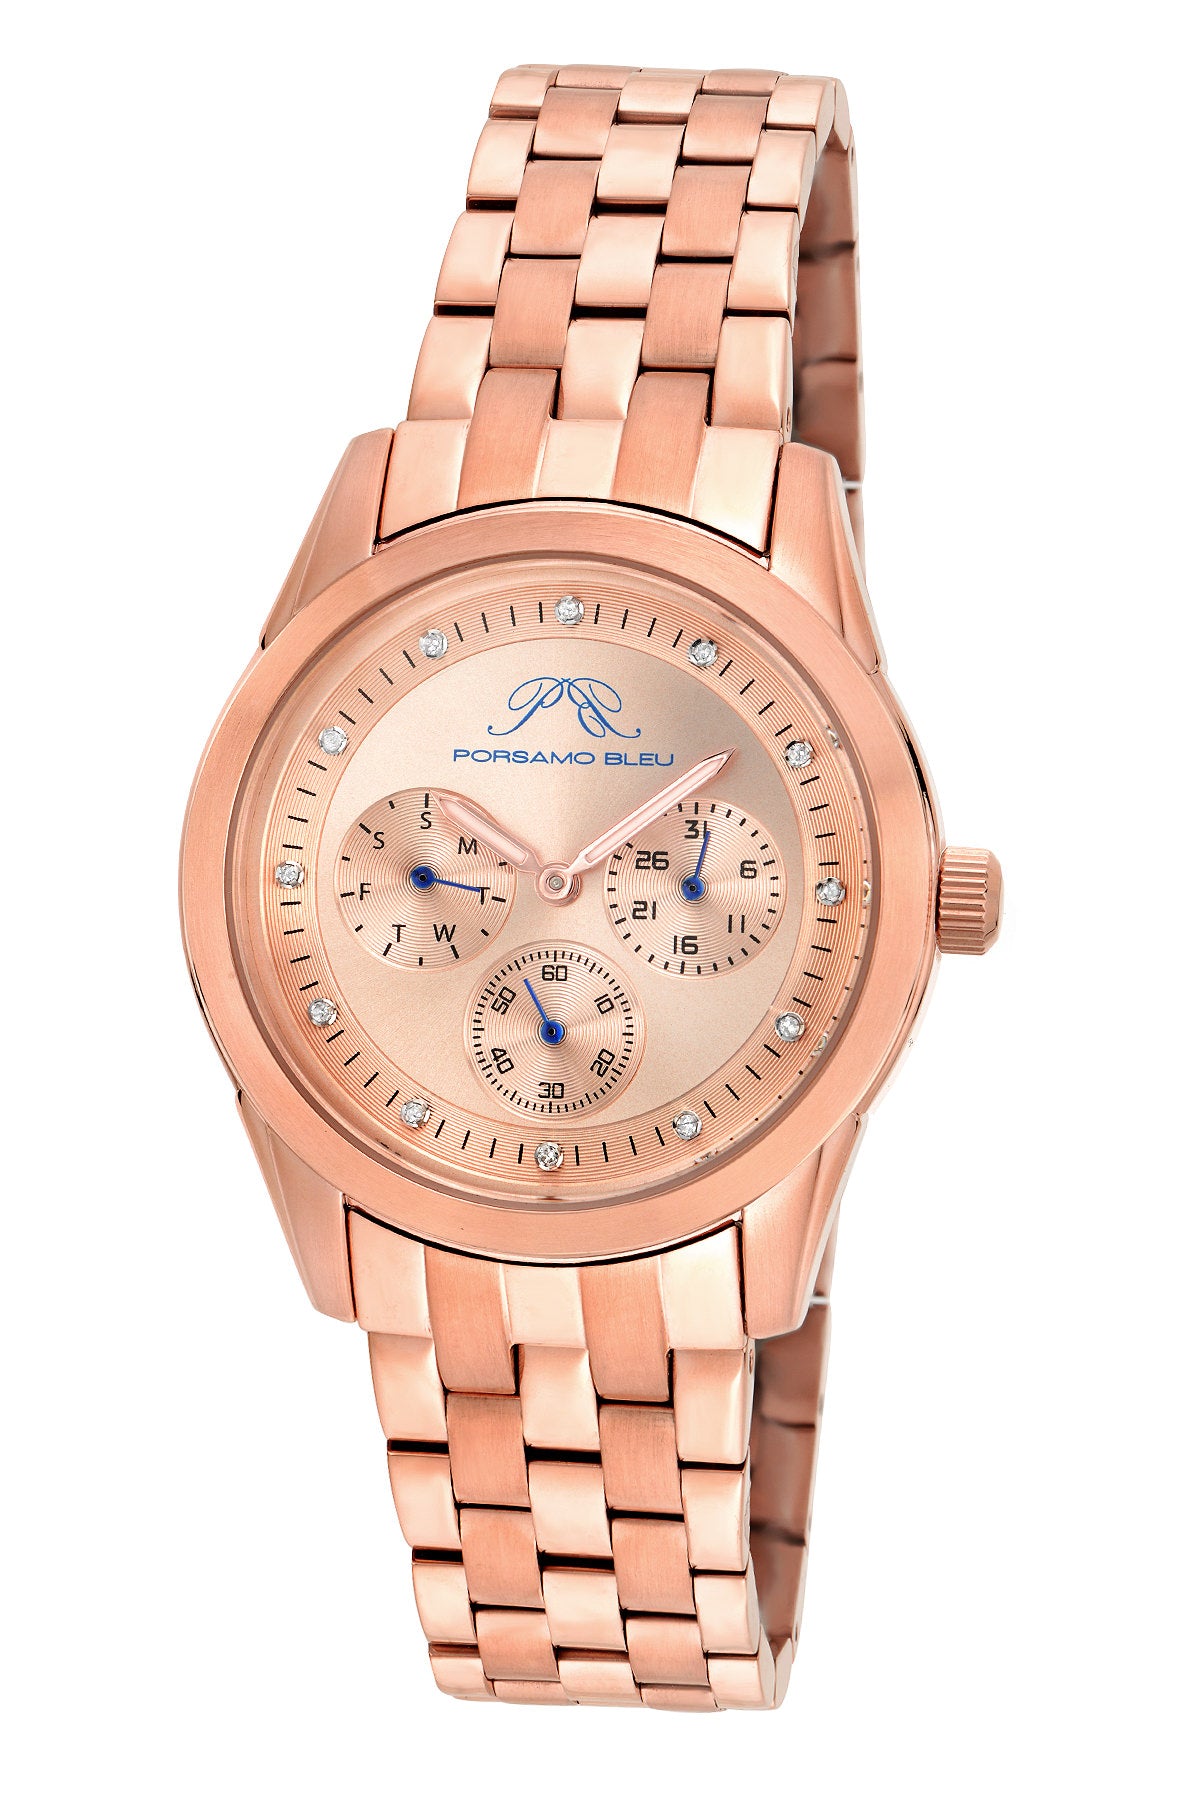 Porsamo Bleu Diana Luxury Diamond Women's Stainless Steel Watch, Rose 741CDIS